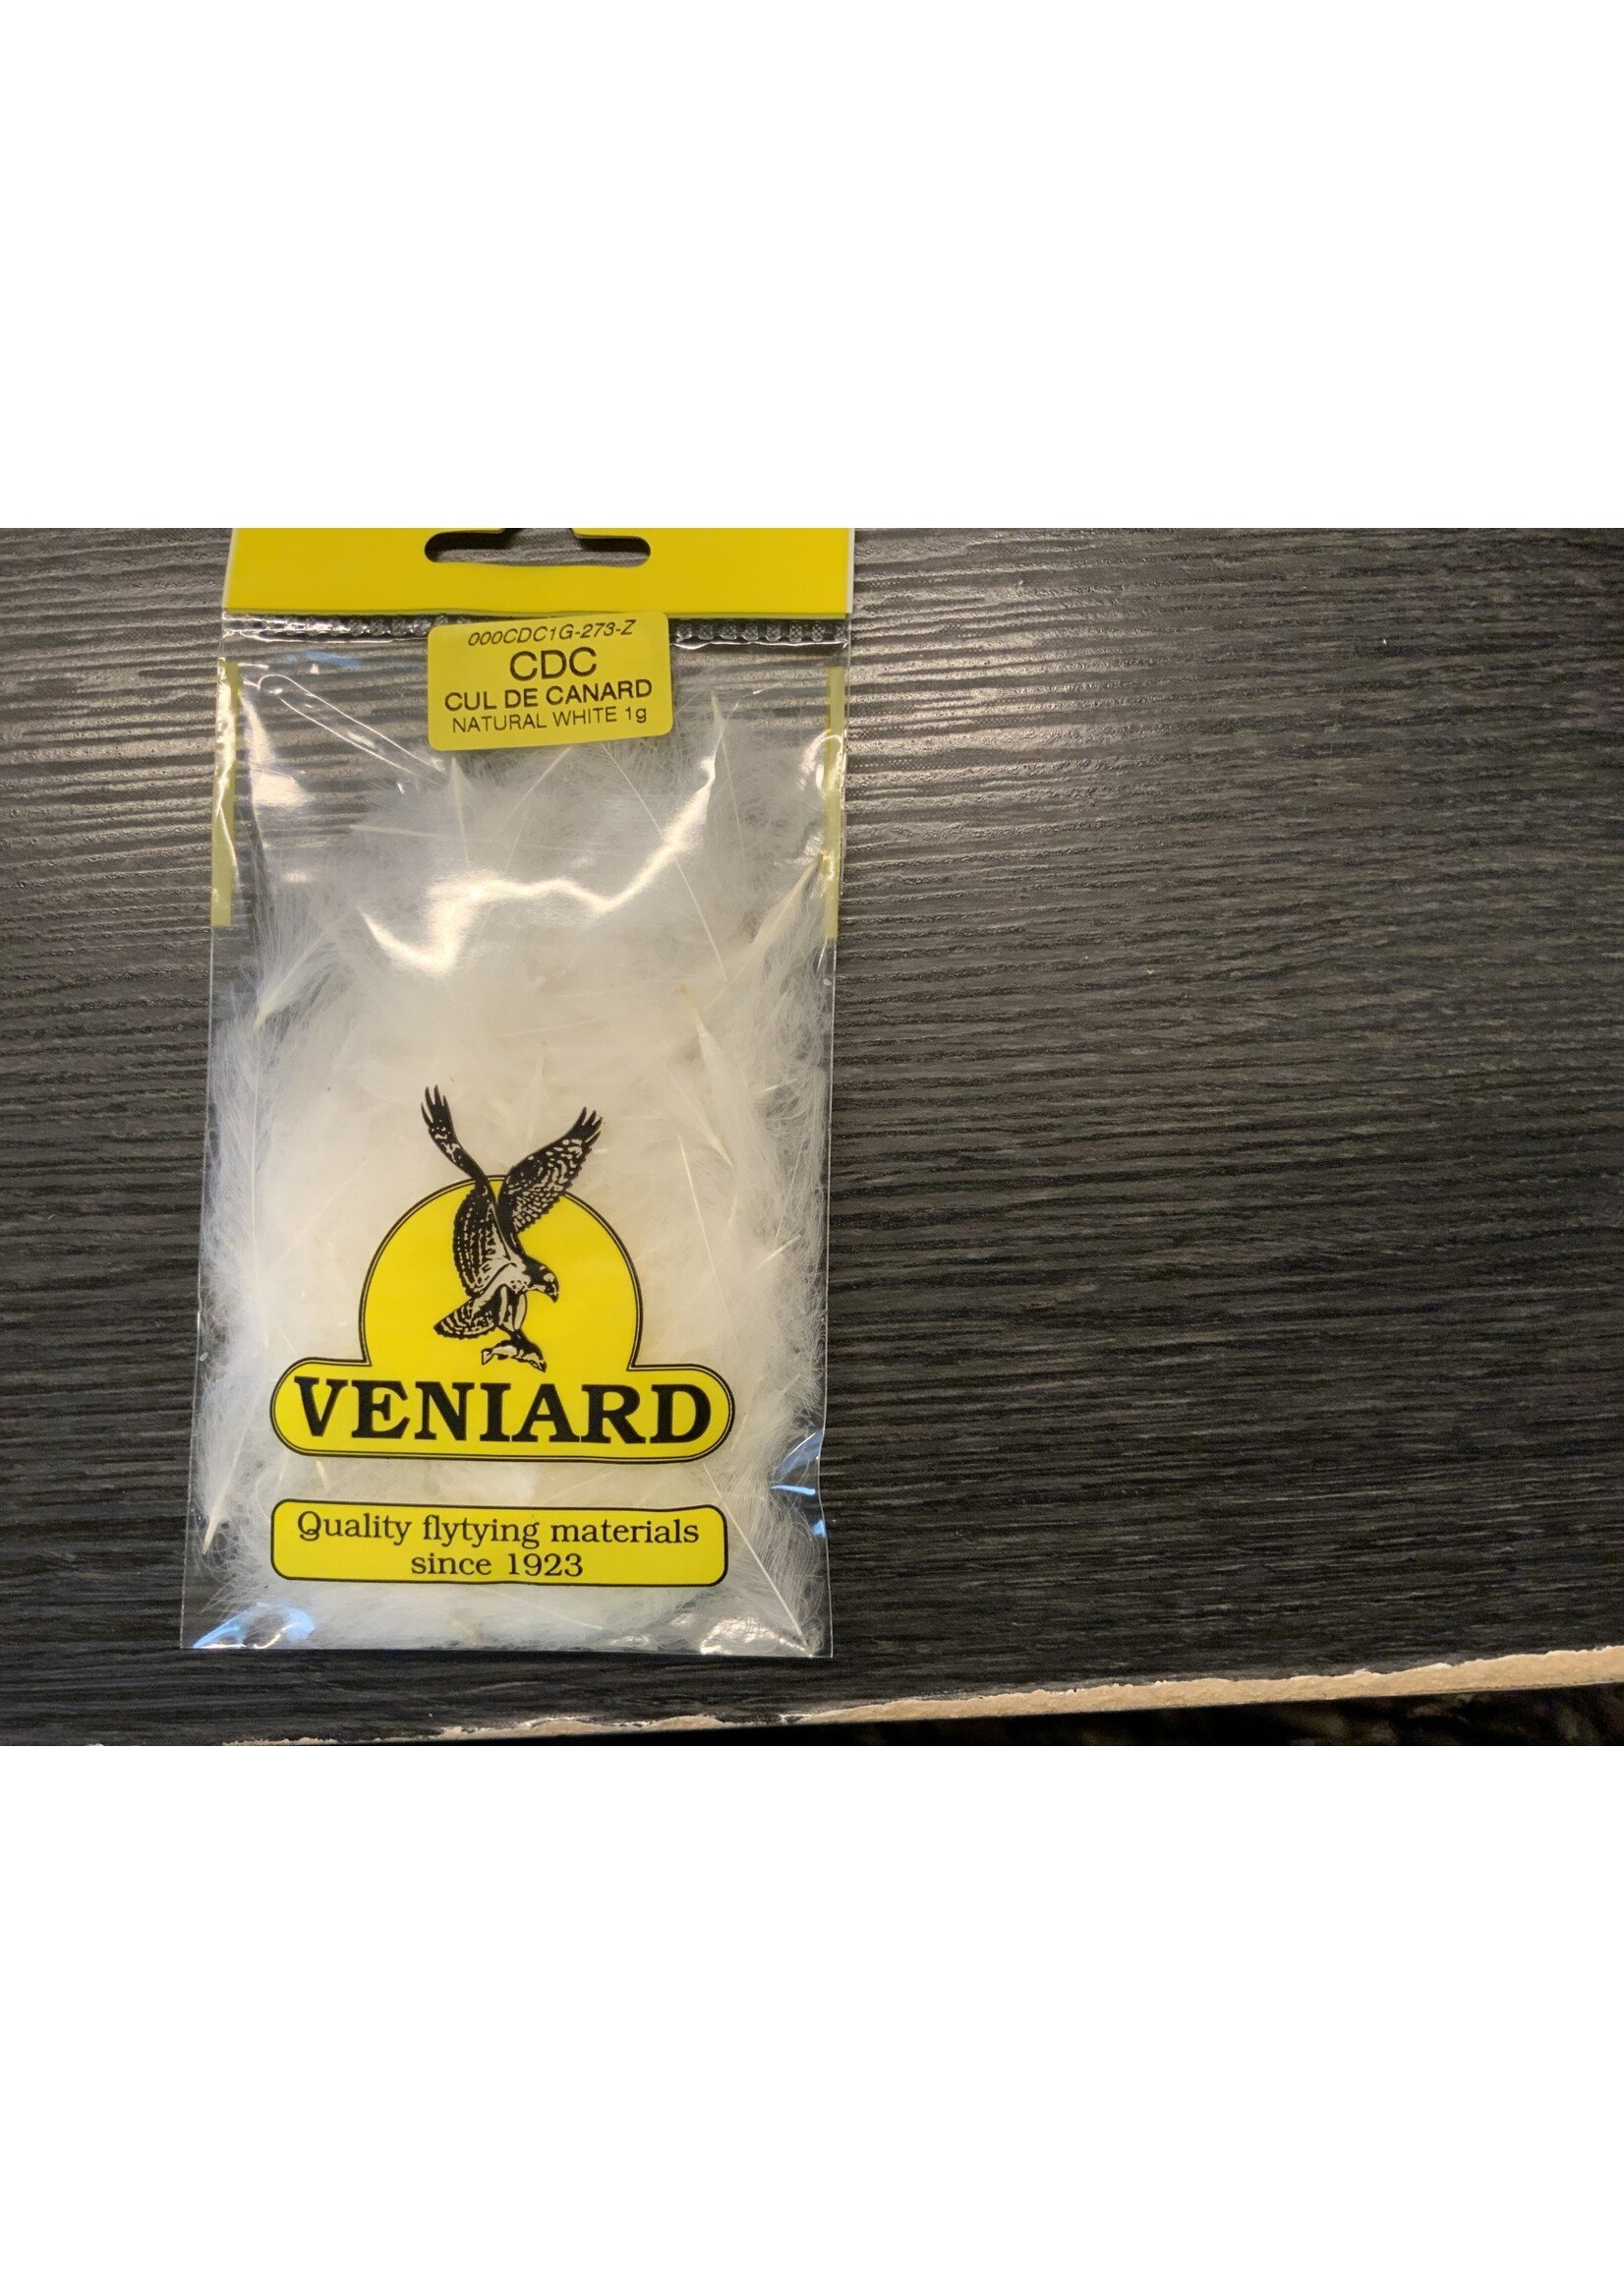 Veniard Cul de canard(CDC) Bulk 1 Gram Packs Natural White